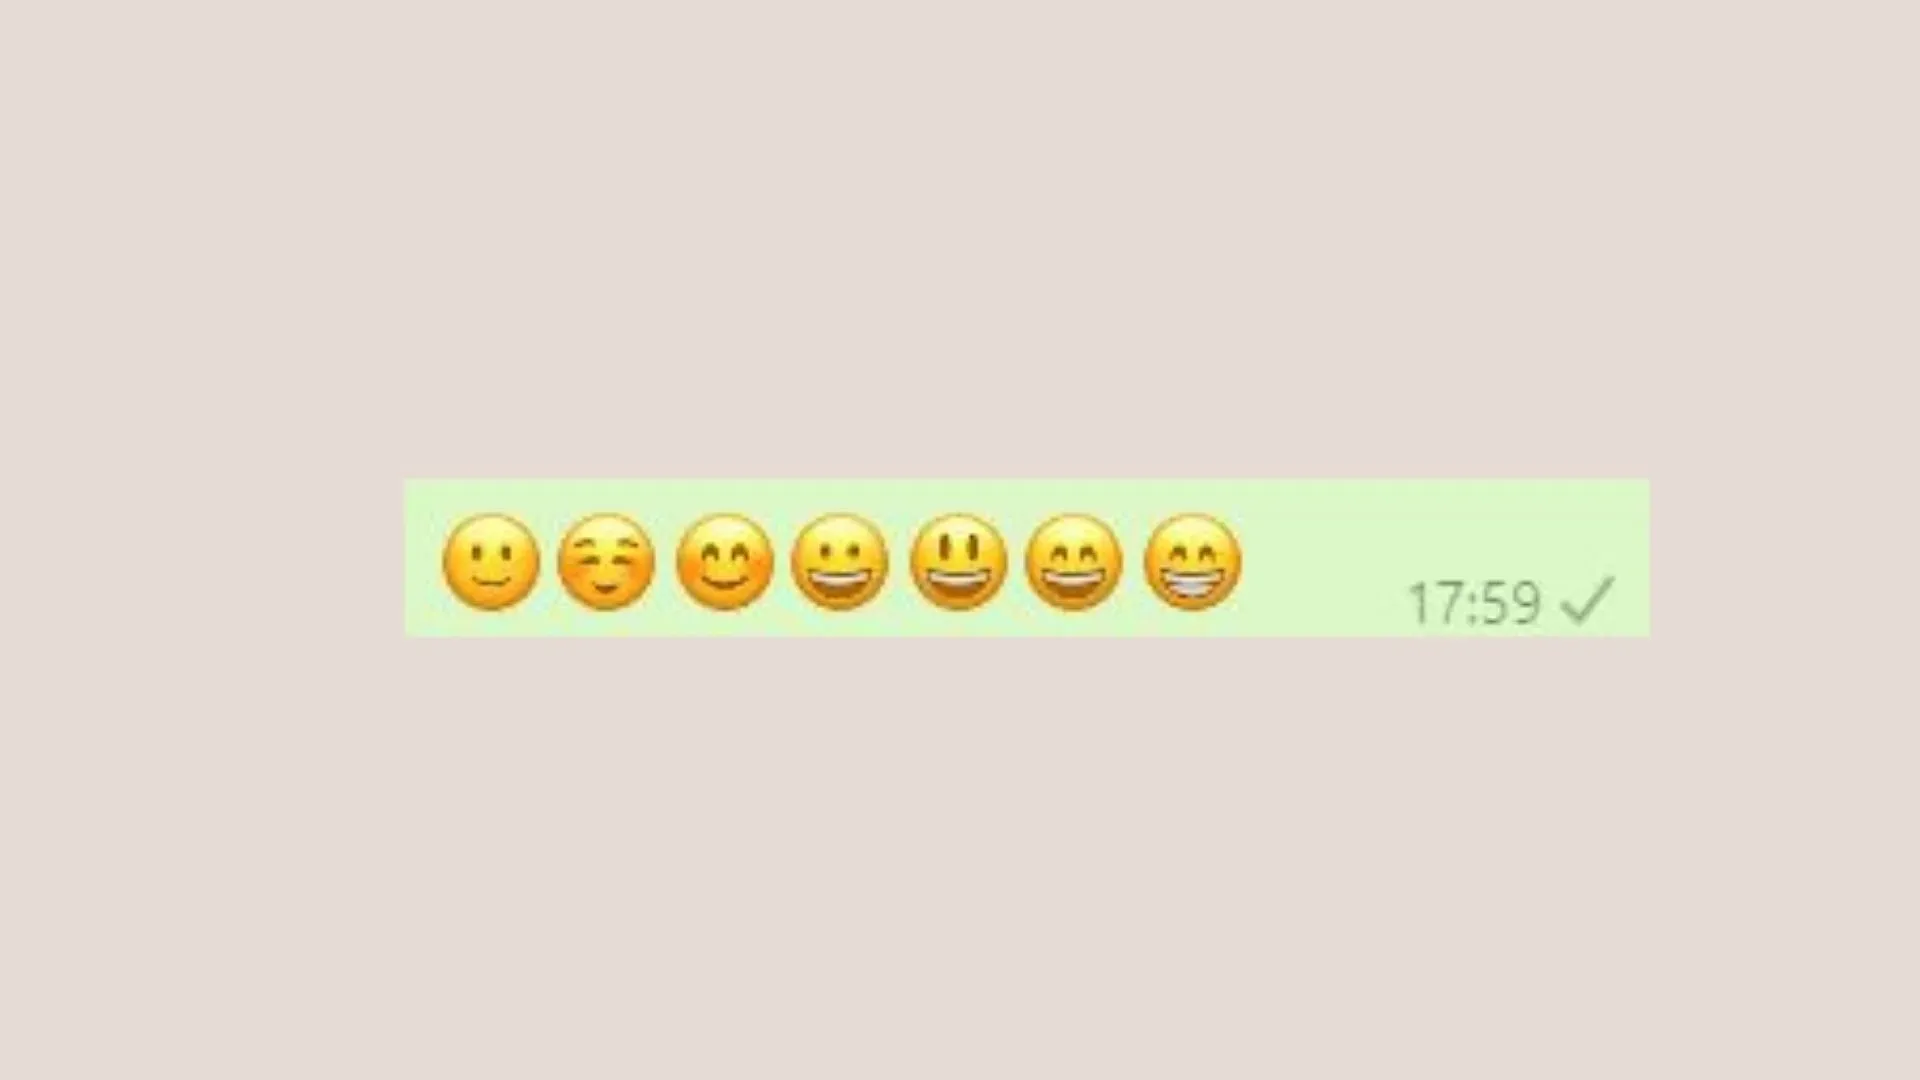 Significado dos emojis do WhatsApp e como usá-los